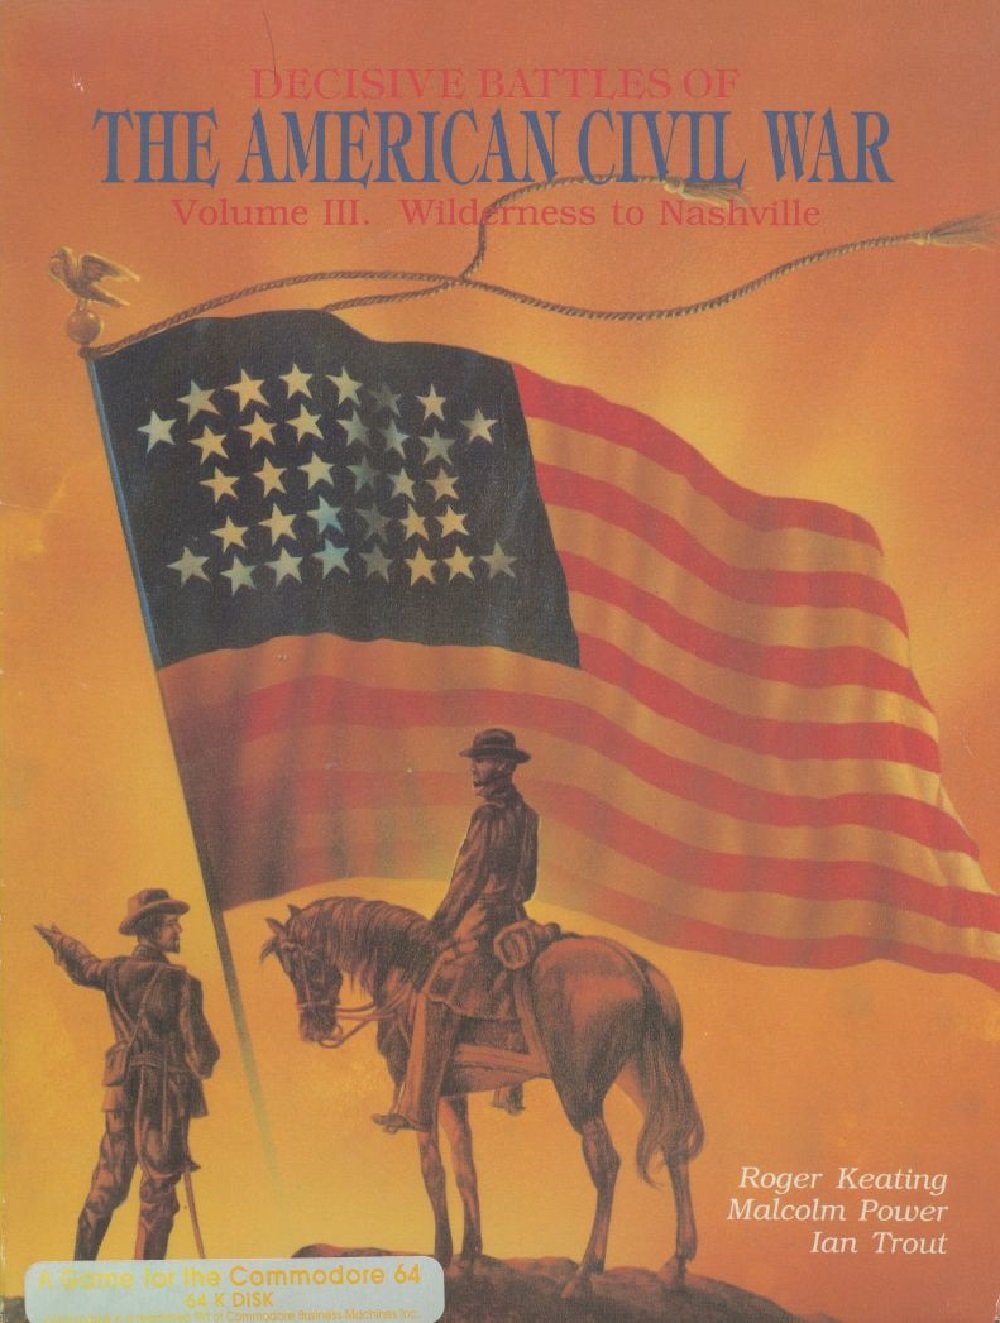 Image of Decisive Battles of the American Civil War, Volume Three